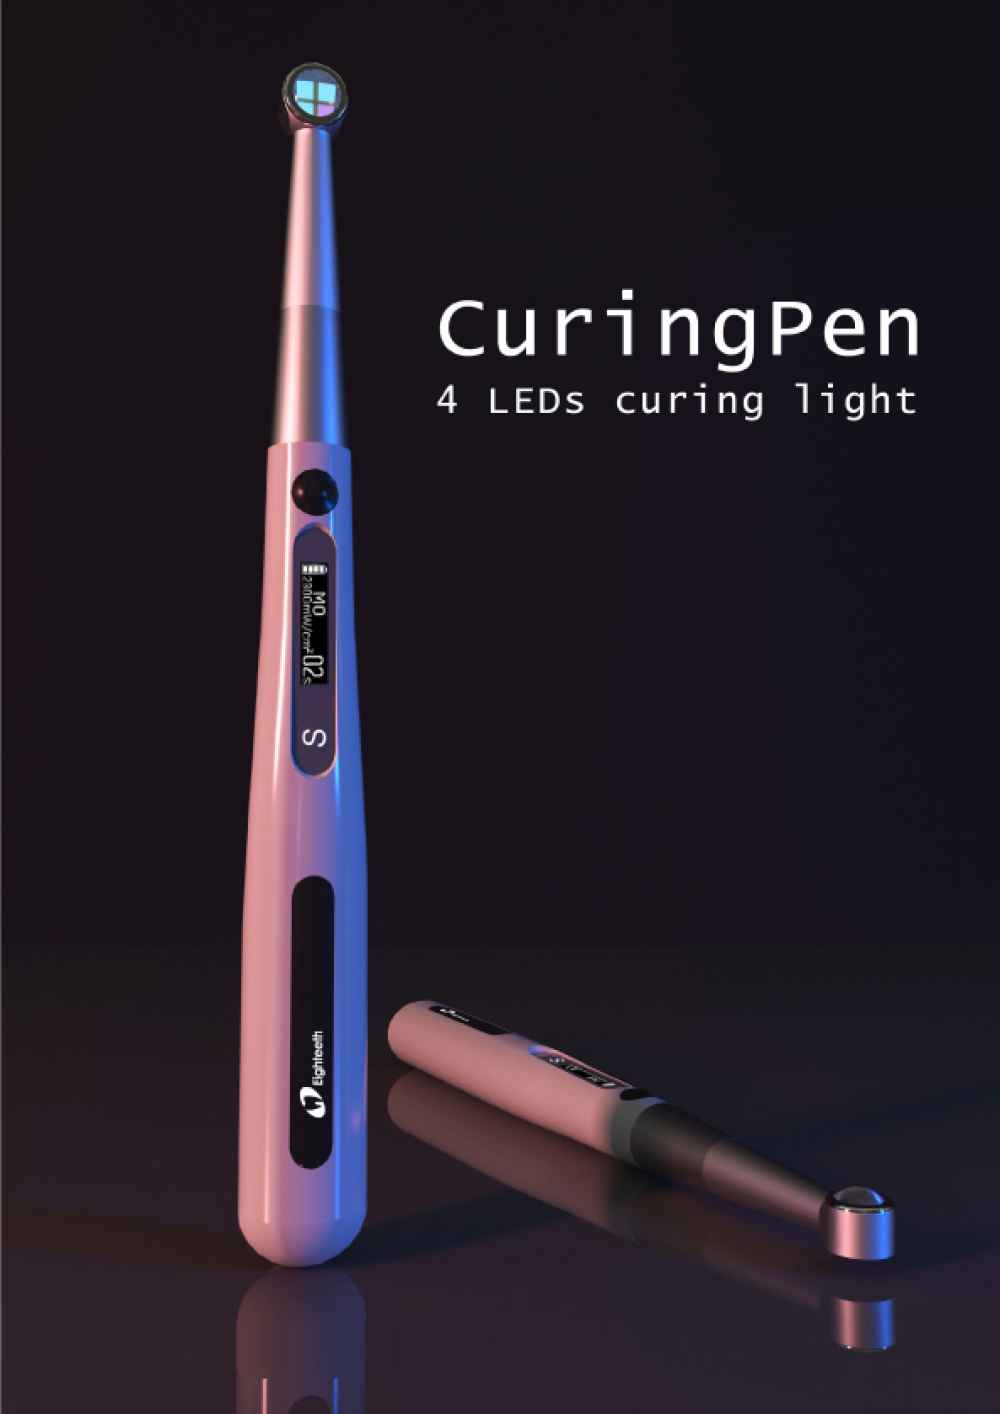  Eighteeth Medical Curing Pen